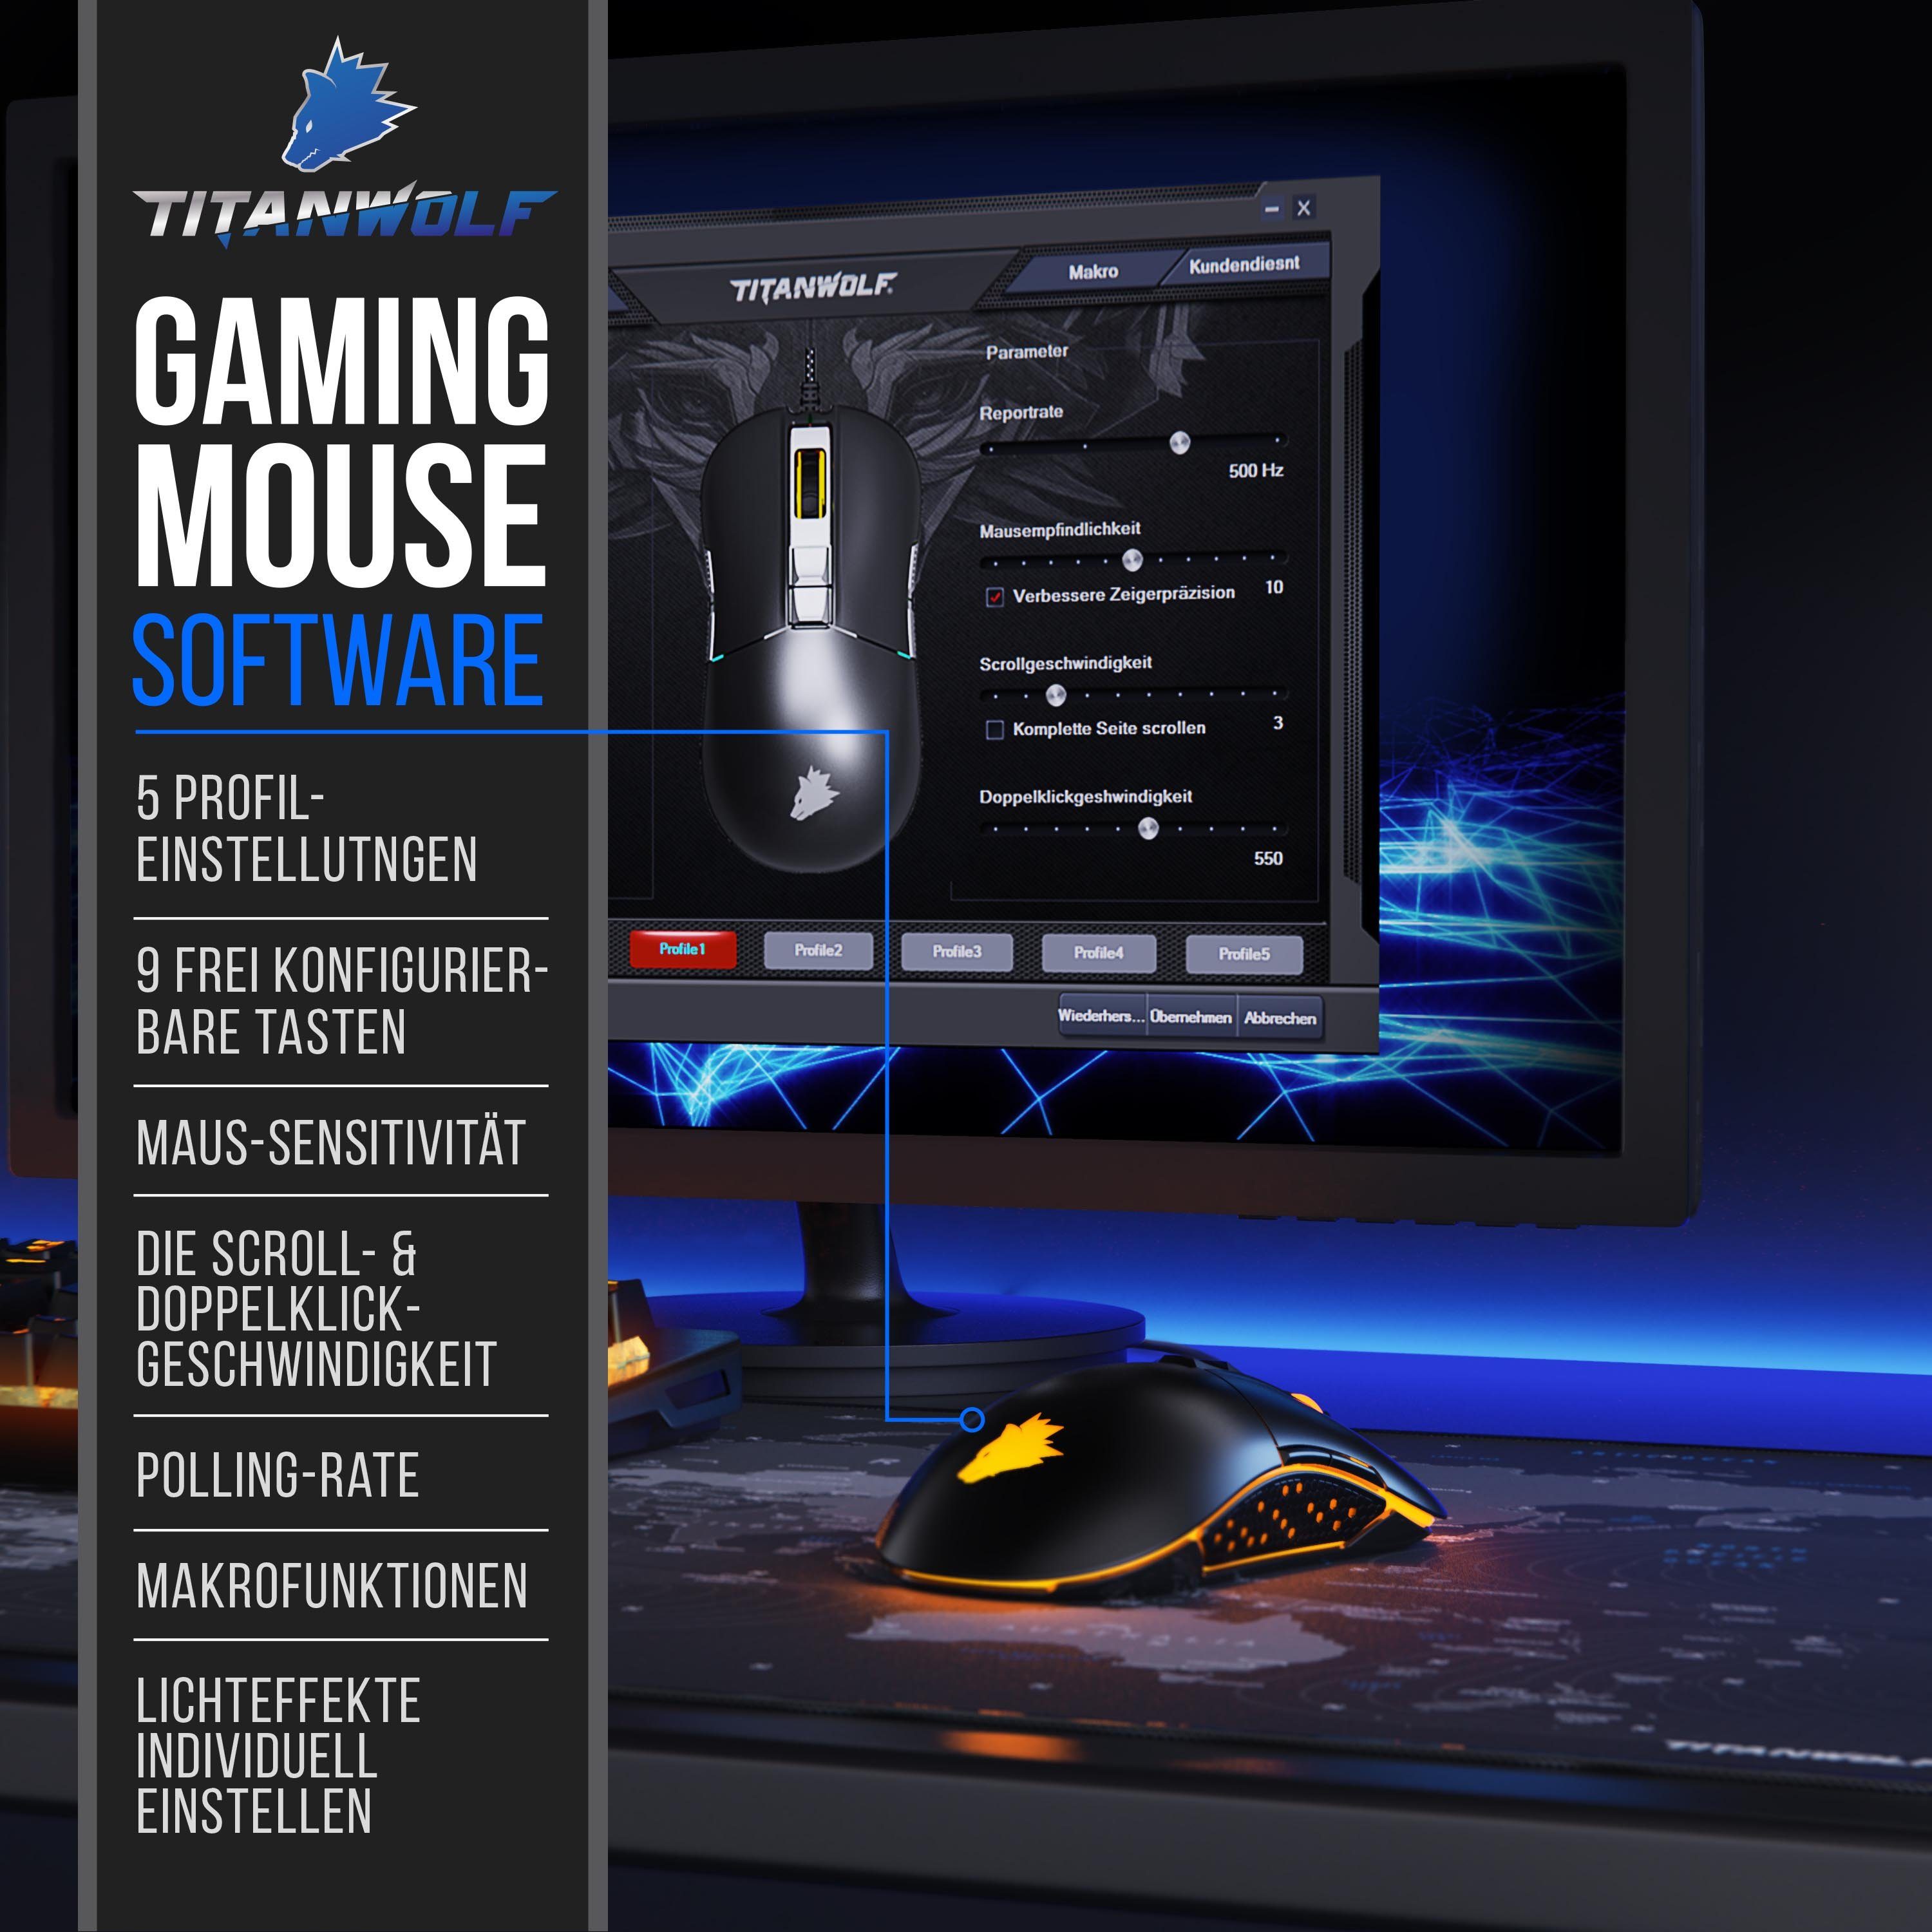 Pixart Sensor, Rechts 3310 Linkshänder, 5000 Titanwolf dpi, & RGB) (Mouse für Gaming-Maus